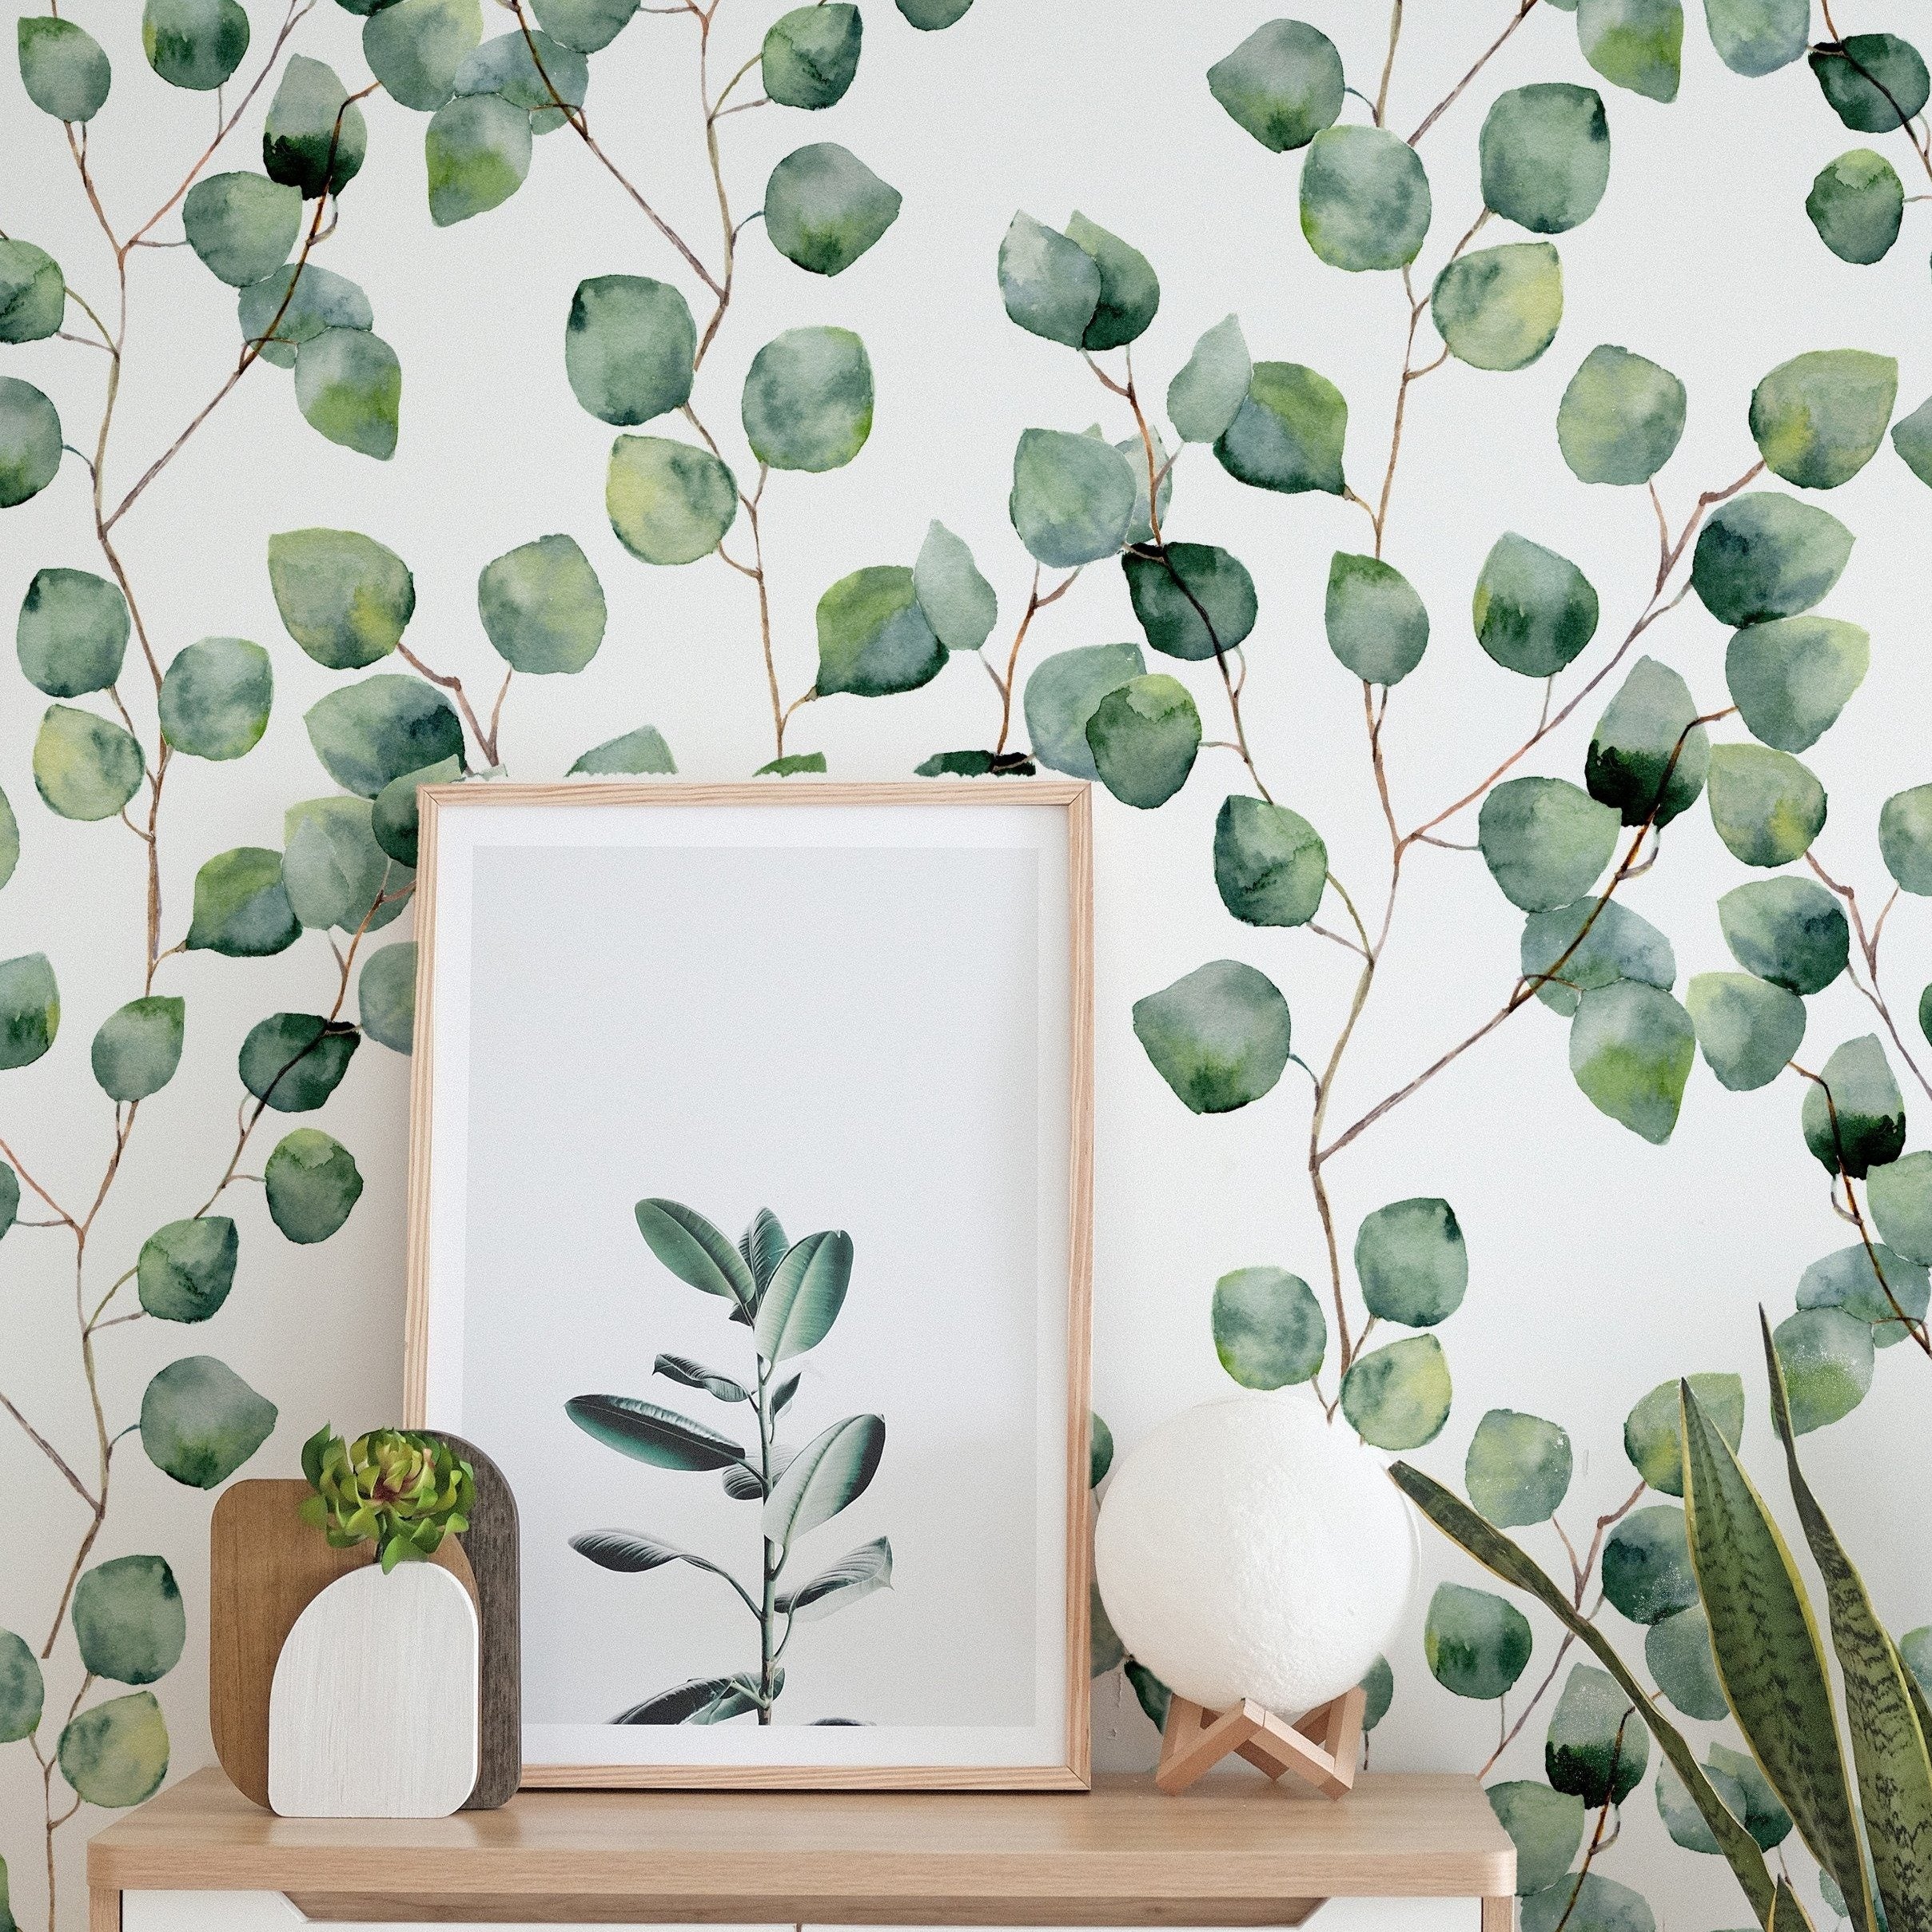 wallpaper, peel and stick wallpaper, Home decor, watercolor floral wallpaper, floral wallpaper, eucalyptus wallpaper,  green wallpaper, bedroom wallpapers, 